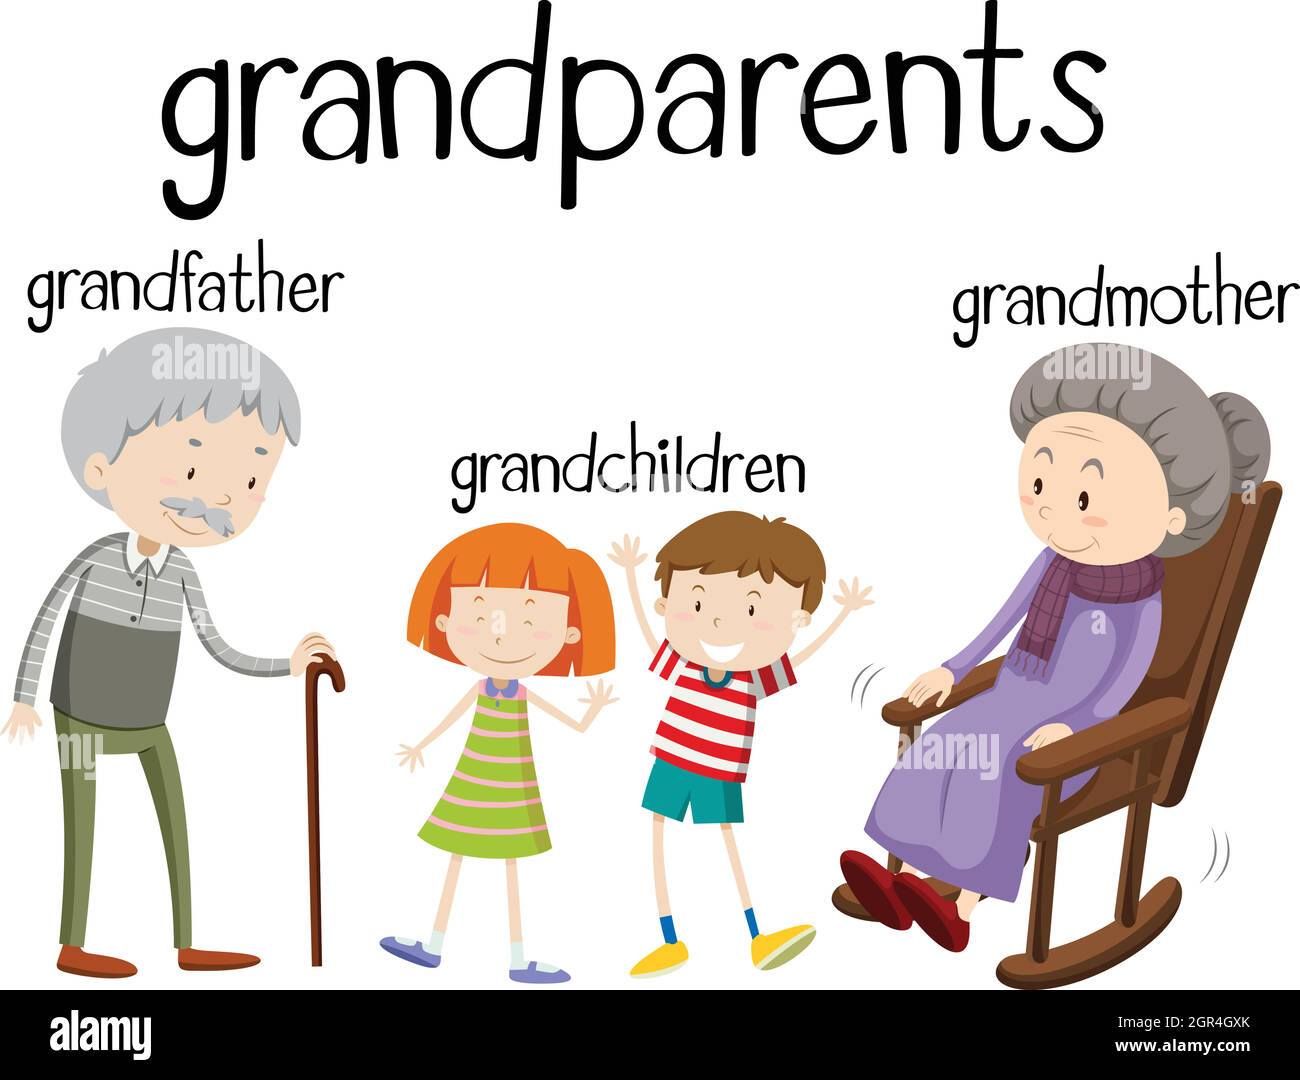 Grandparents and grandchildren together Stock Vector